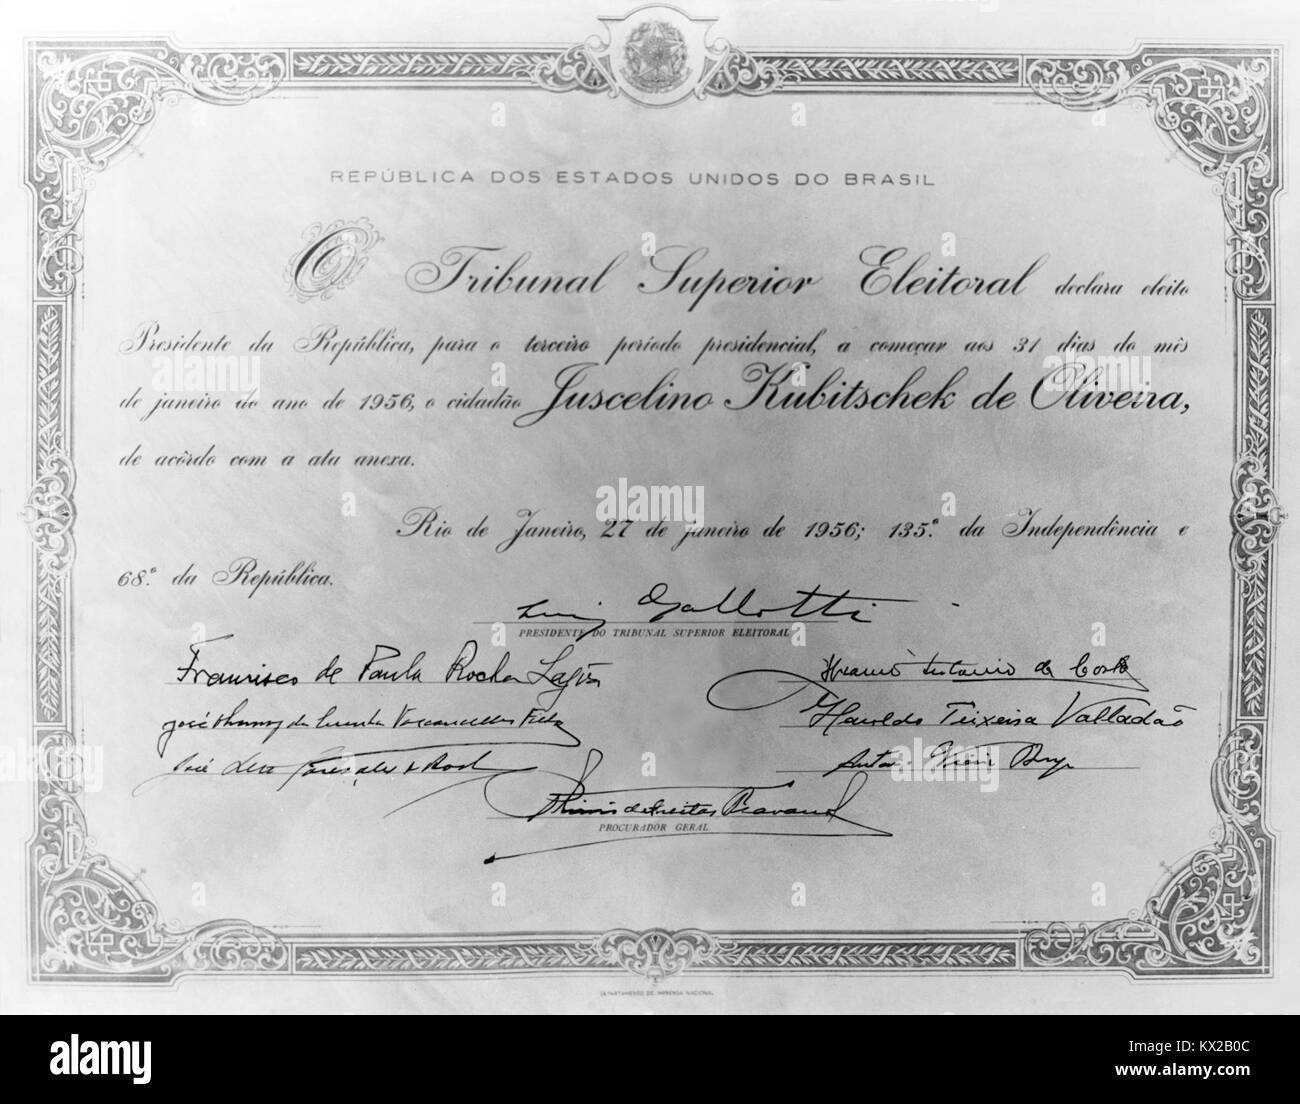 Diploma de Presidente da República de Juscelino Kubitschek Foto Stock